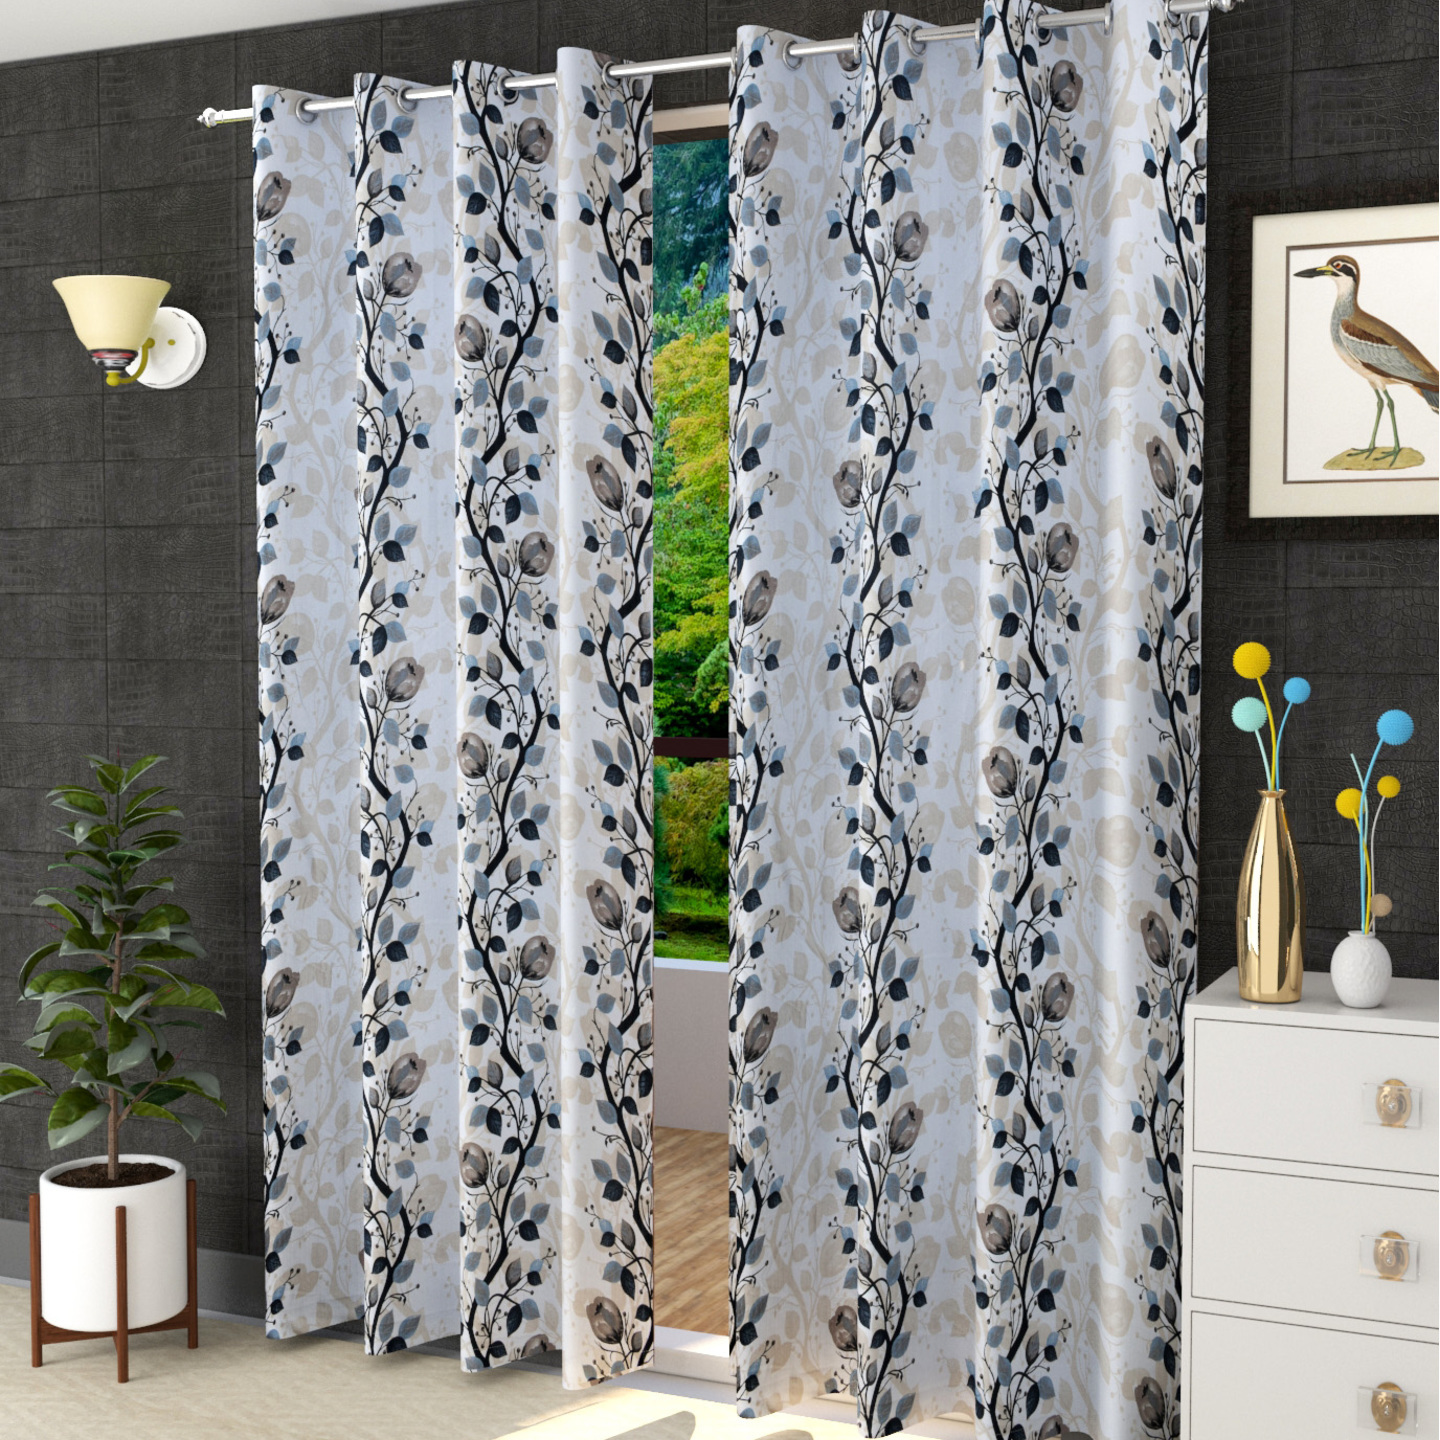  Handtex Home Long Crush Printed Curtains for Door 7 Feet Pack of 2,Grey (Grey, Door 7 Feet) 